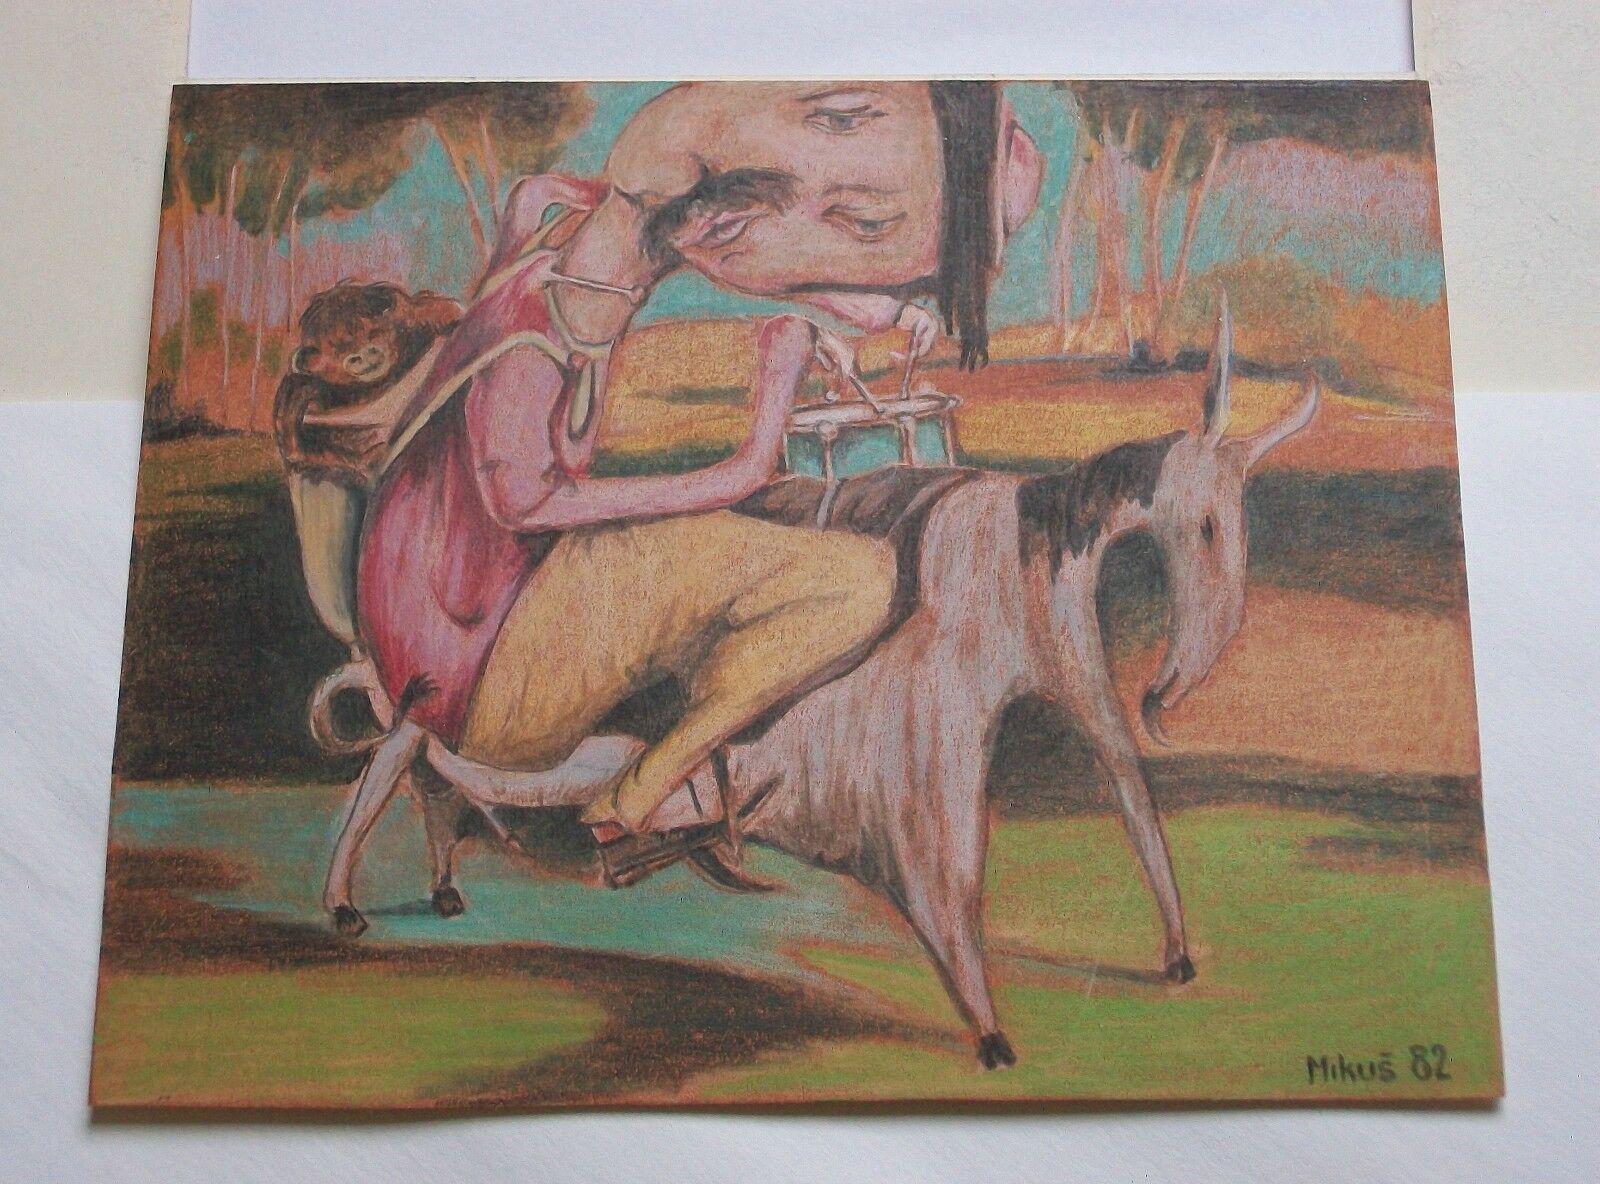 Czech Mikuš, 'Monkey on My Back', Surrealist Colored Pencil Drawing, C.R., C.1982 For Sale